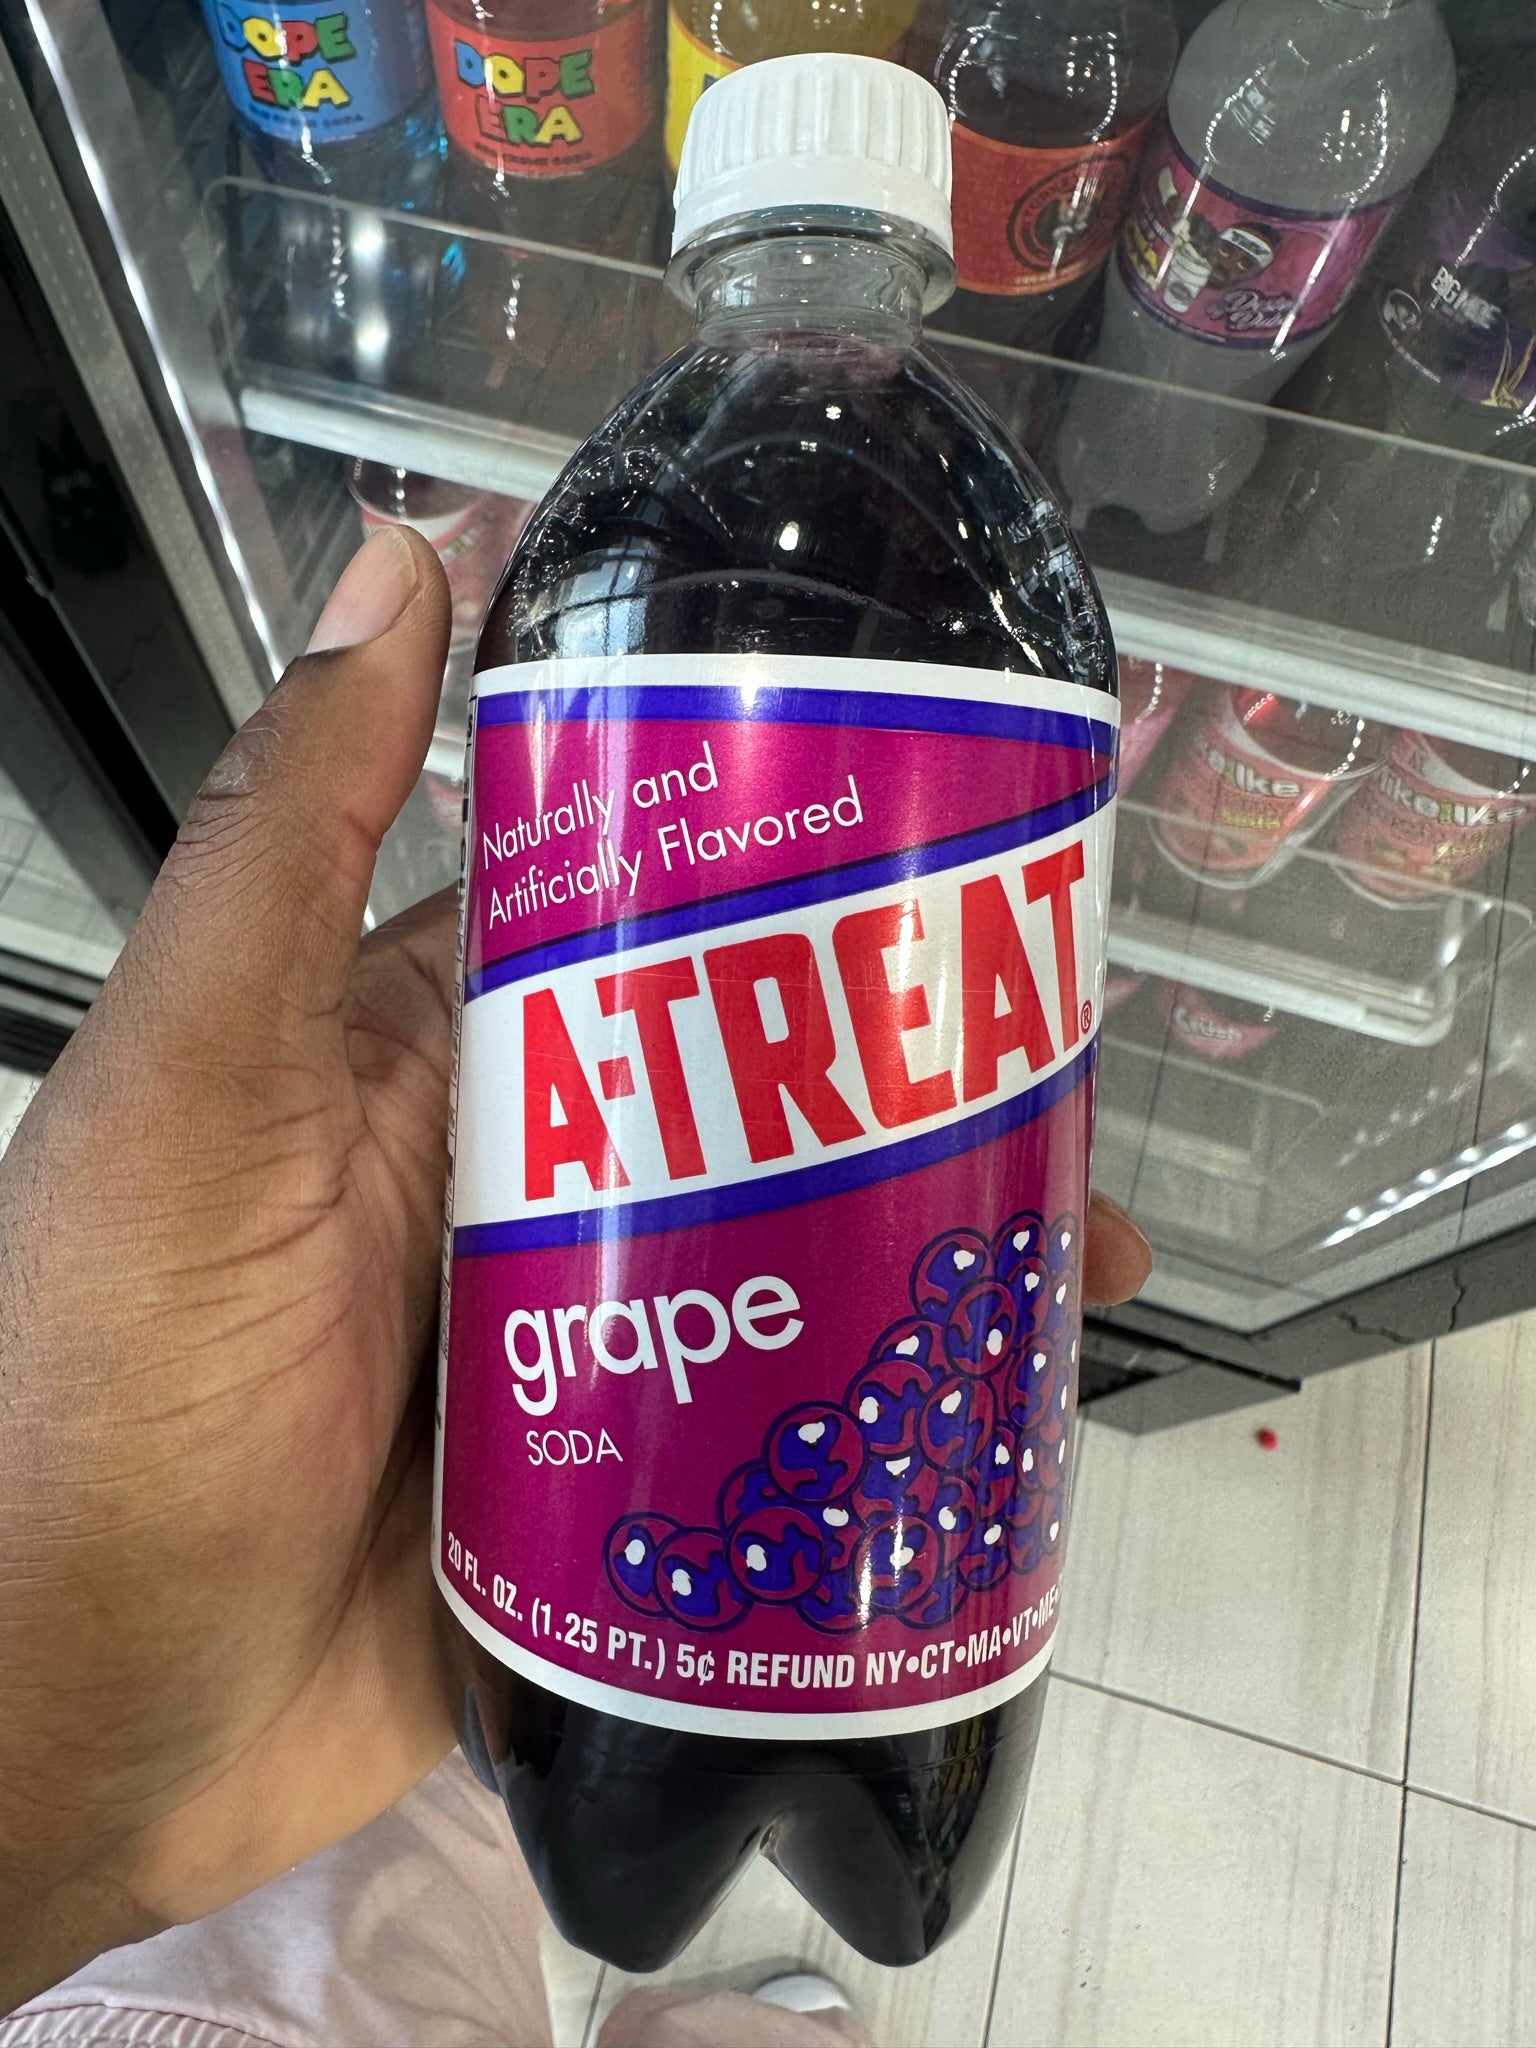 A-Treat Grape Soda